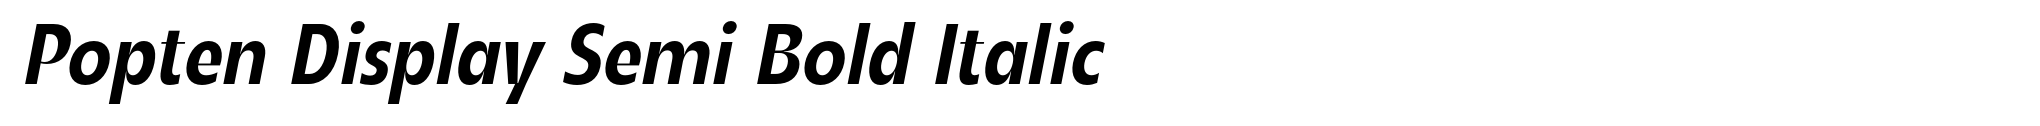 Popten Display Semi Bold Italic image